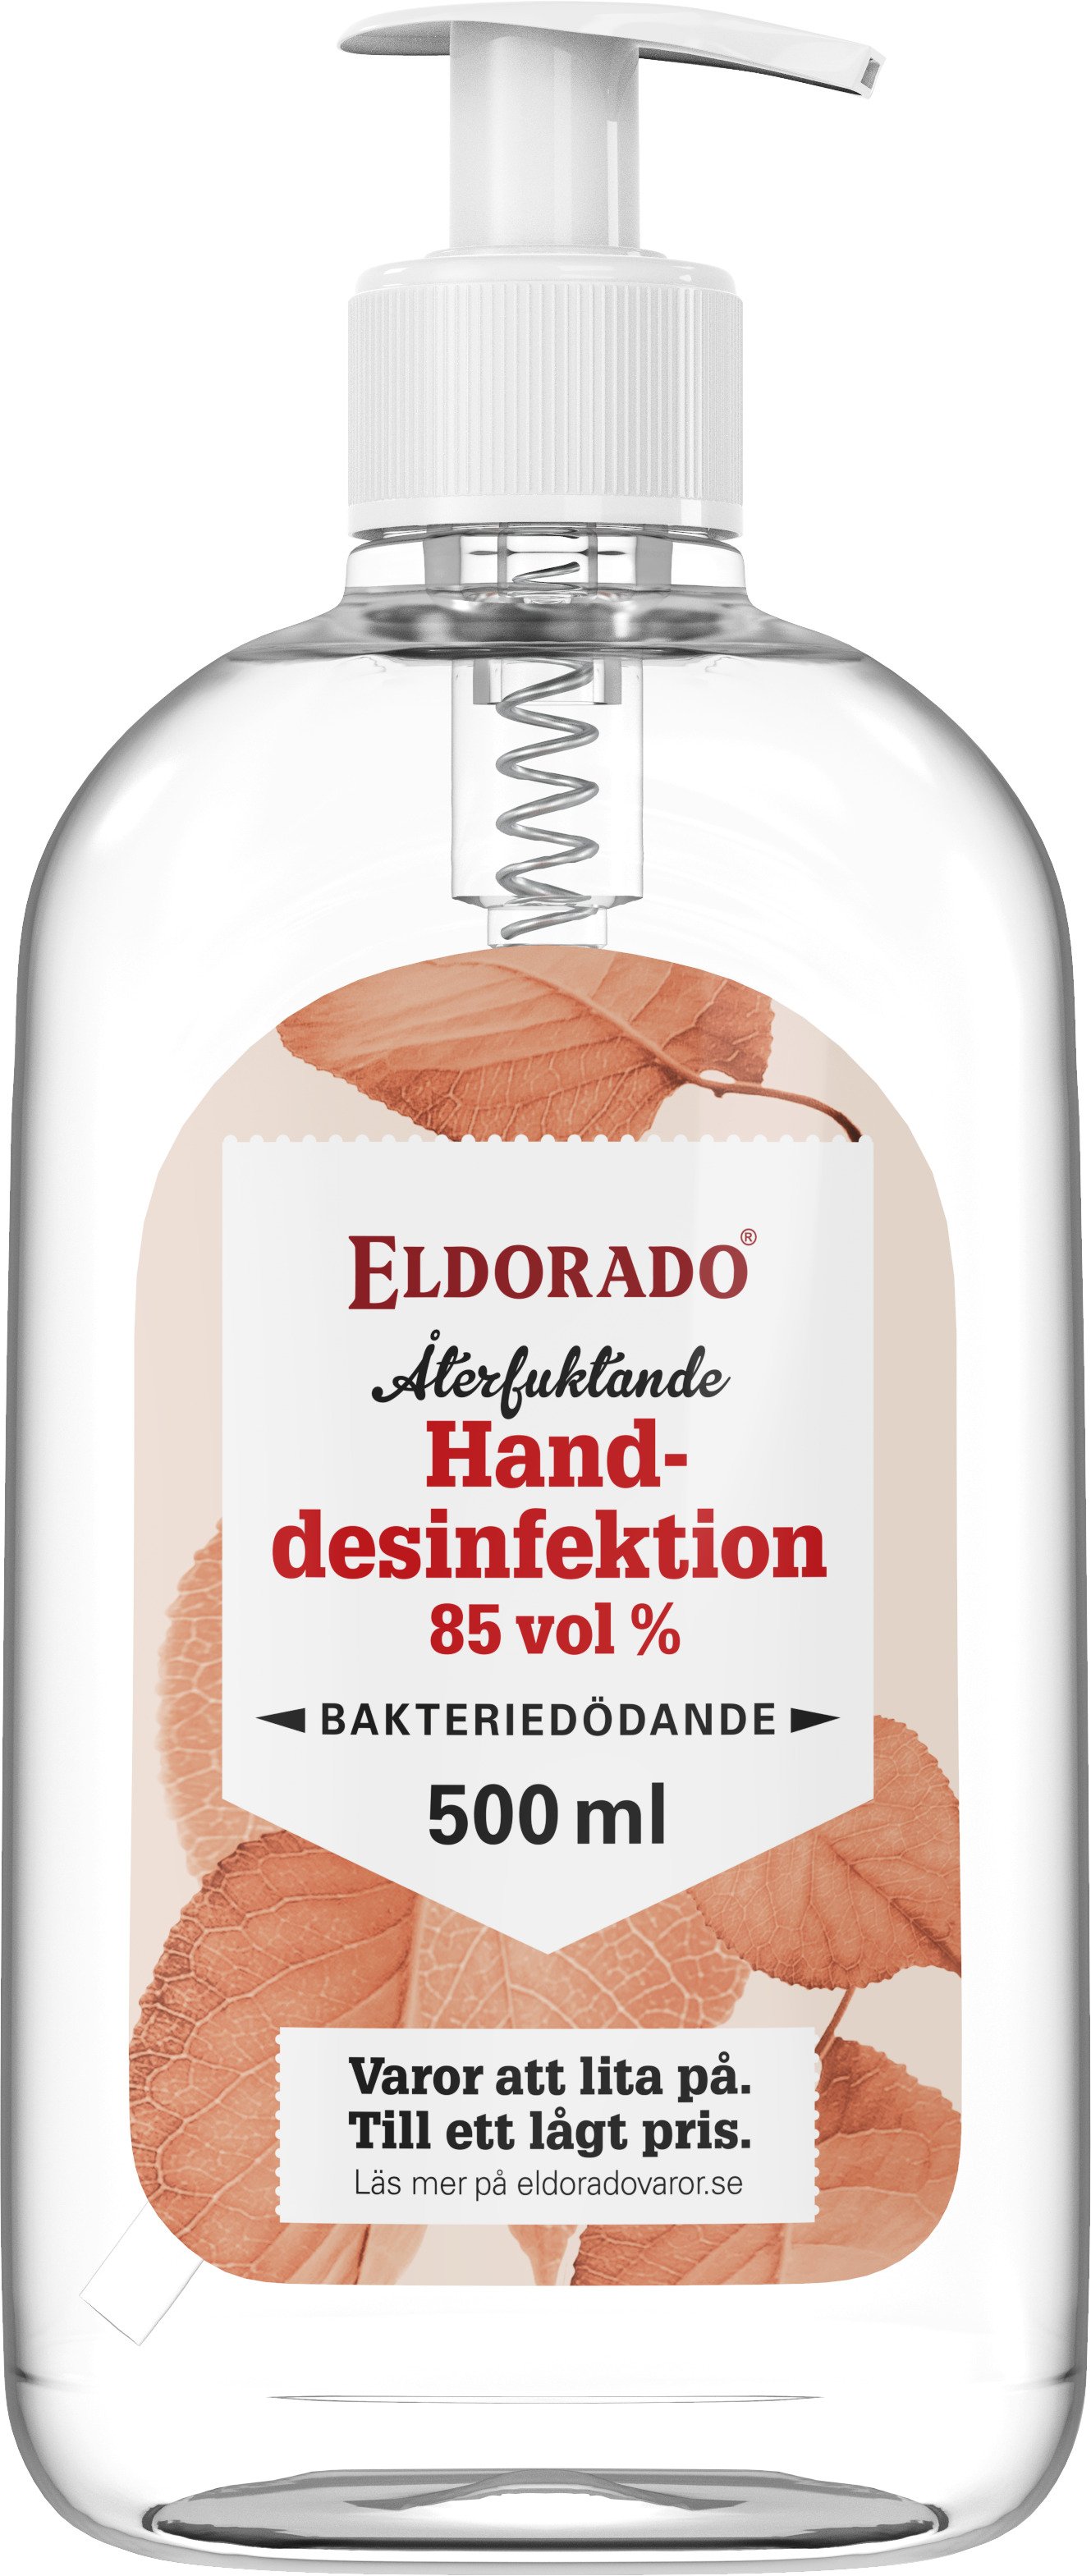 ELDORADO Handdesinfektion 85% 500 ml